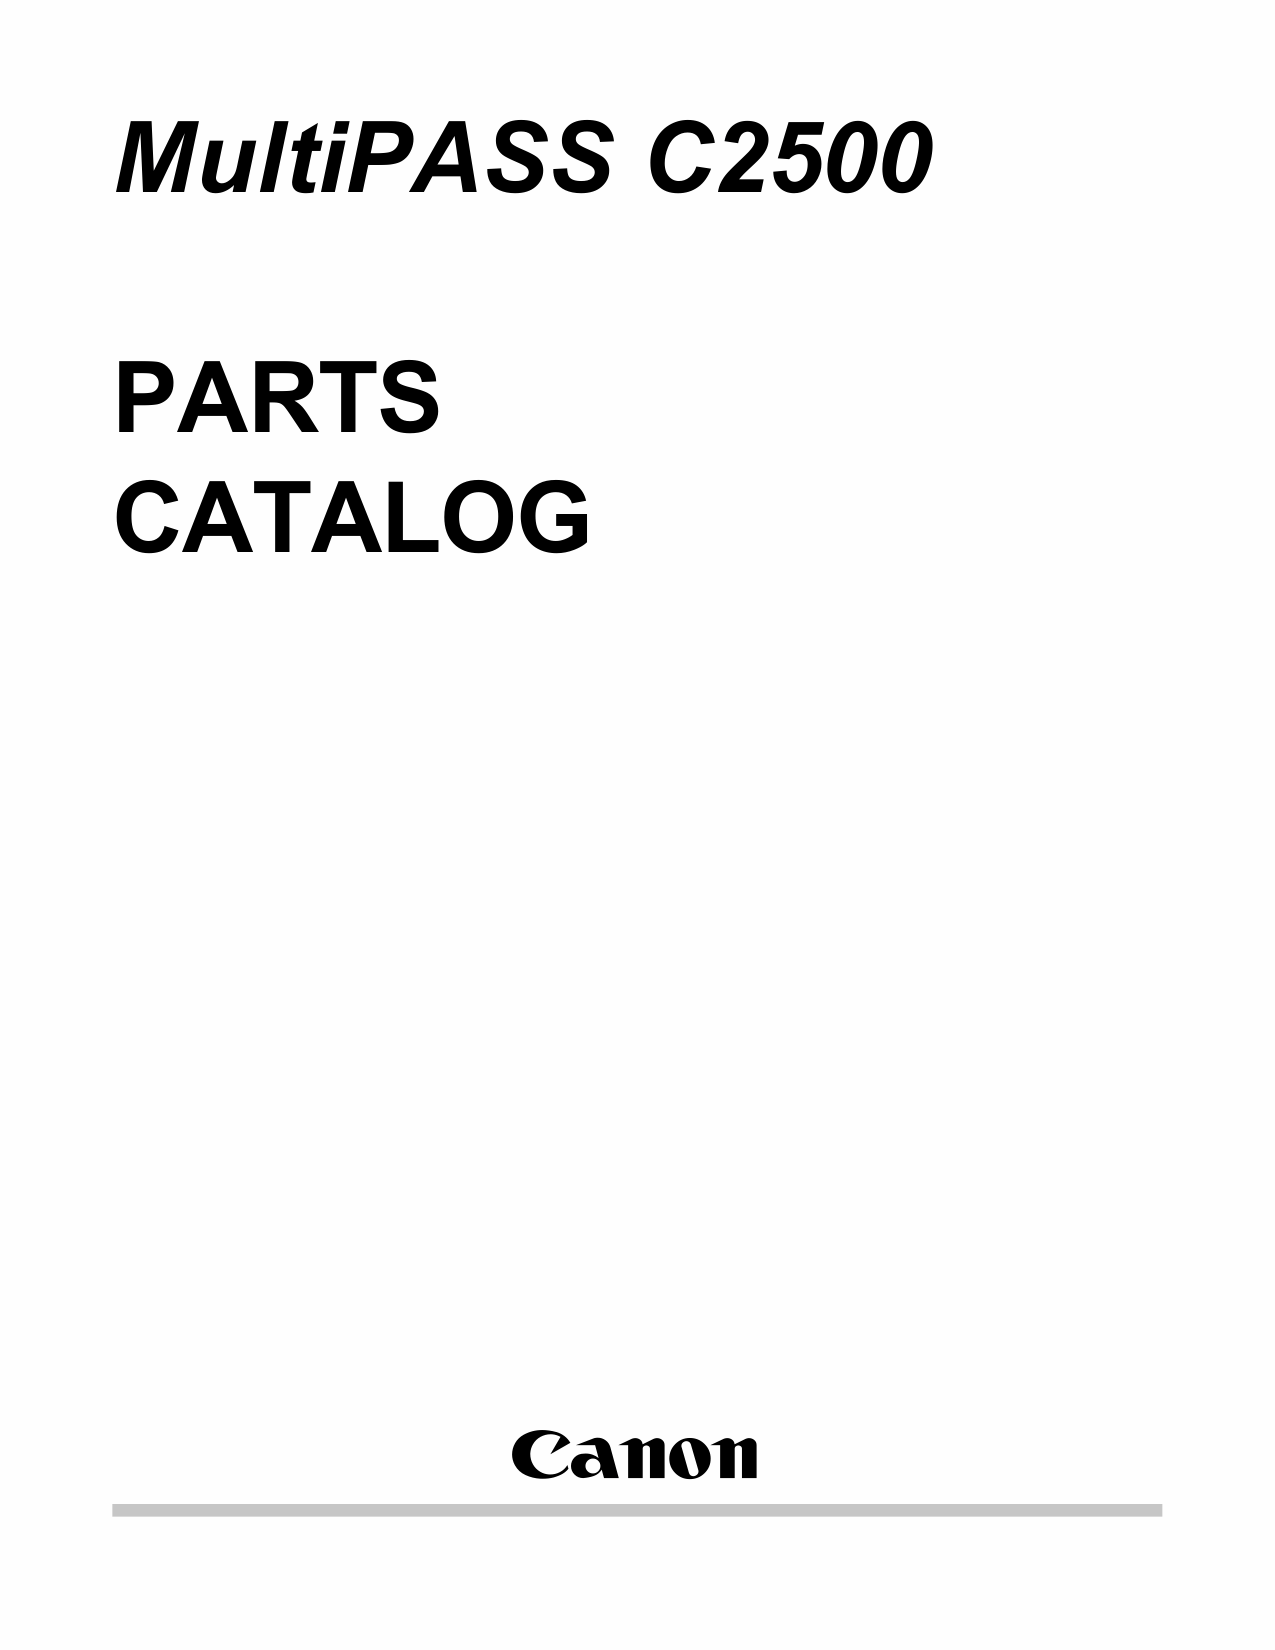 Canon MultiPASS MP-C2500 Parts Catalog Manual-1